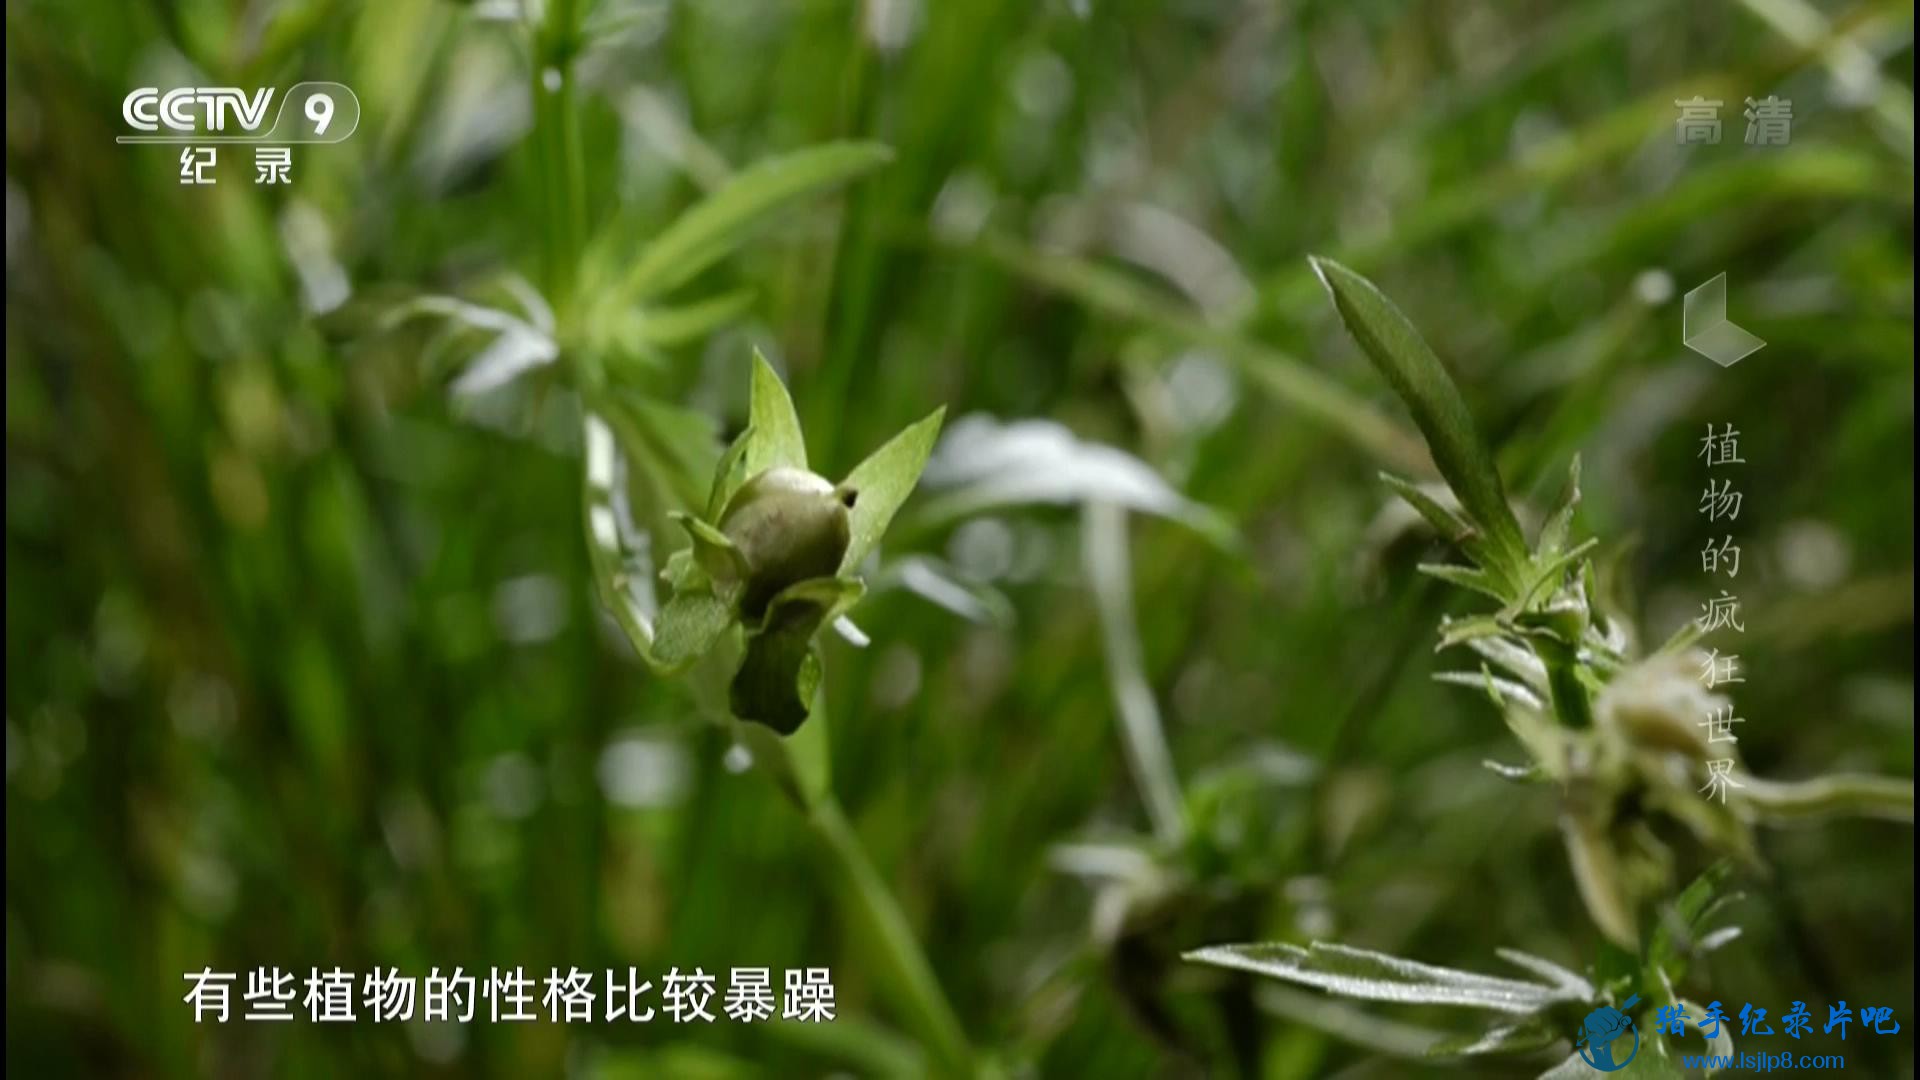 CCTV9 Ұ ֲķ Amazing Plants (2015).1080P.20150217_20180124125534.JPG